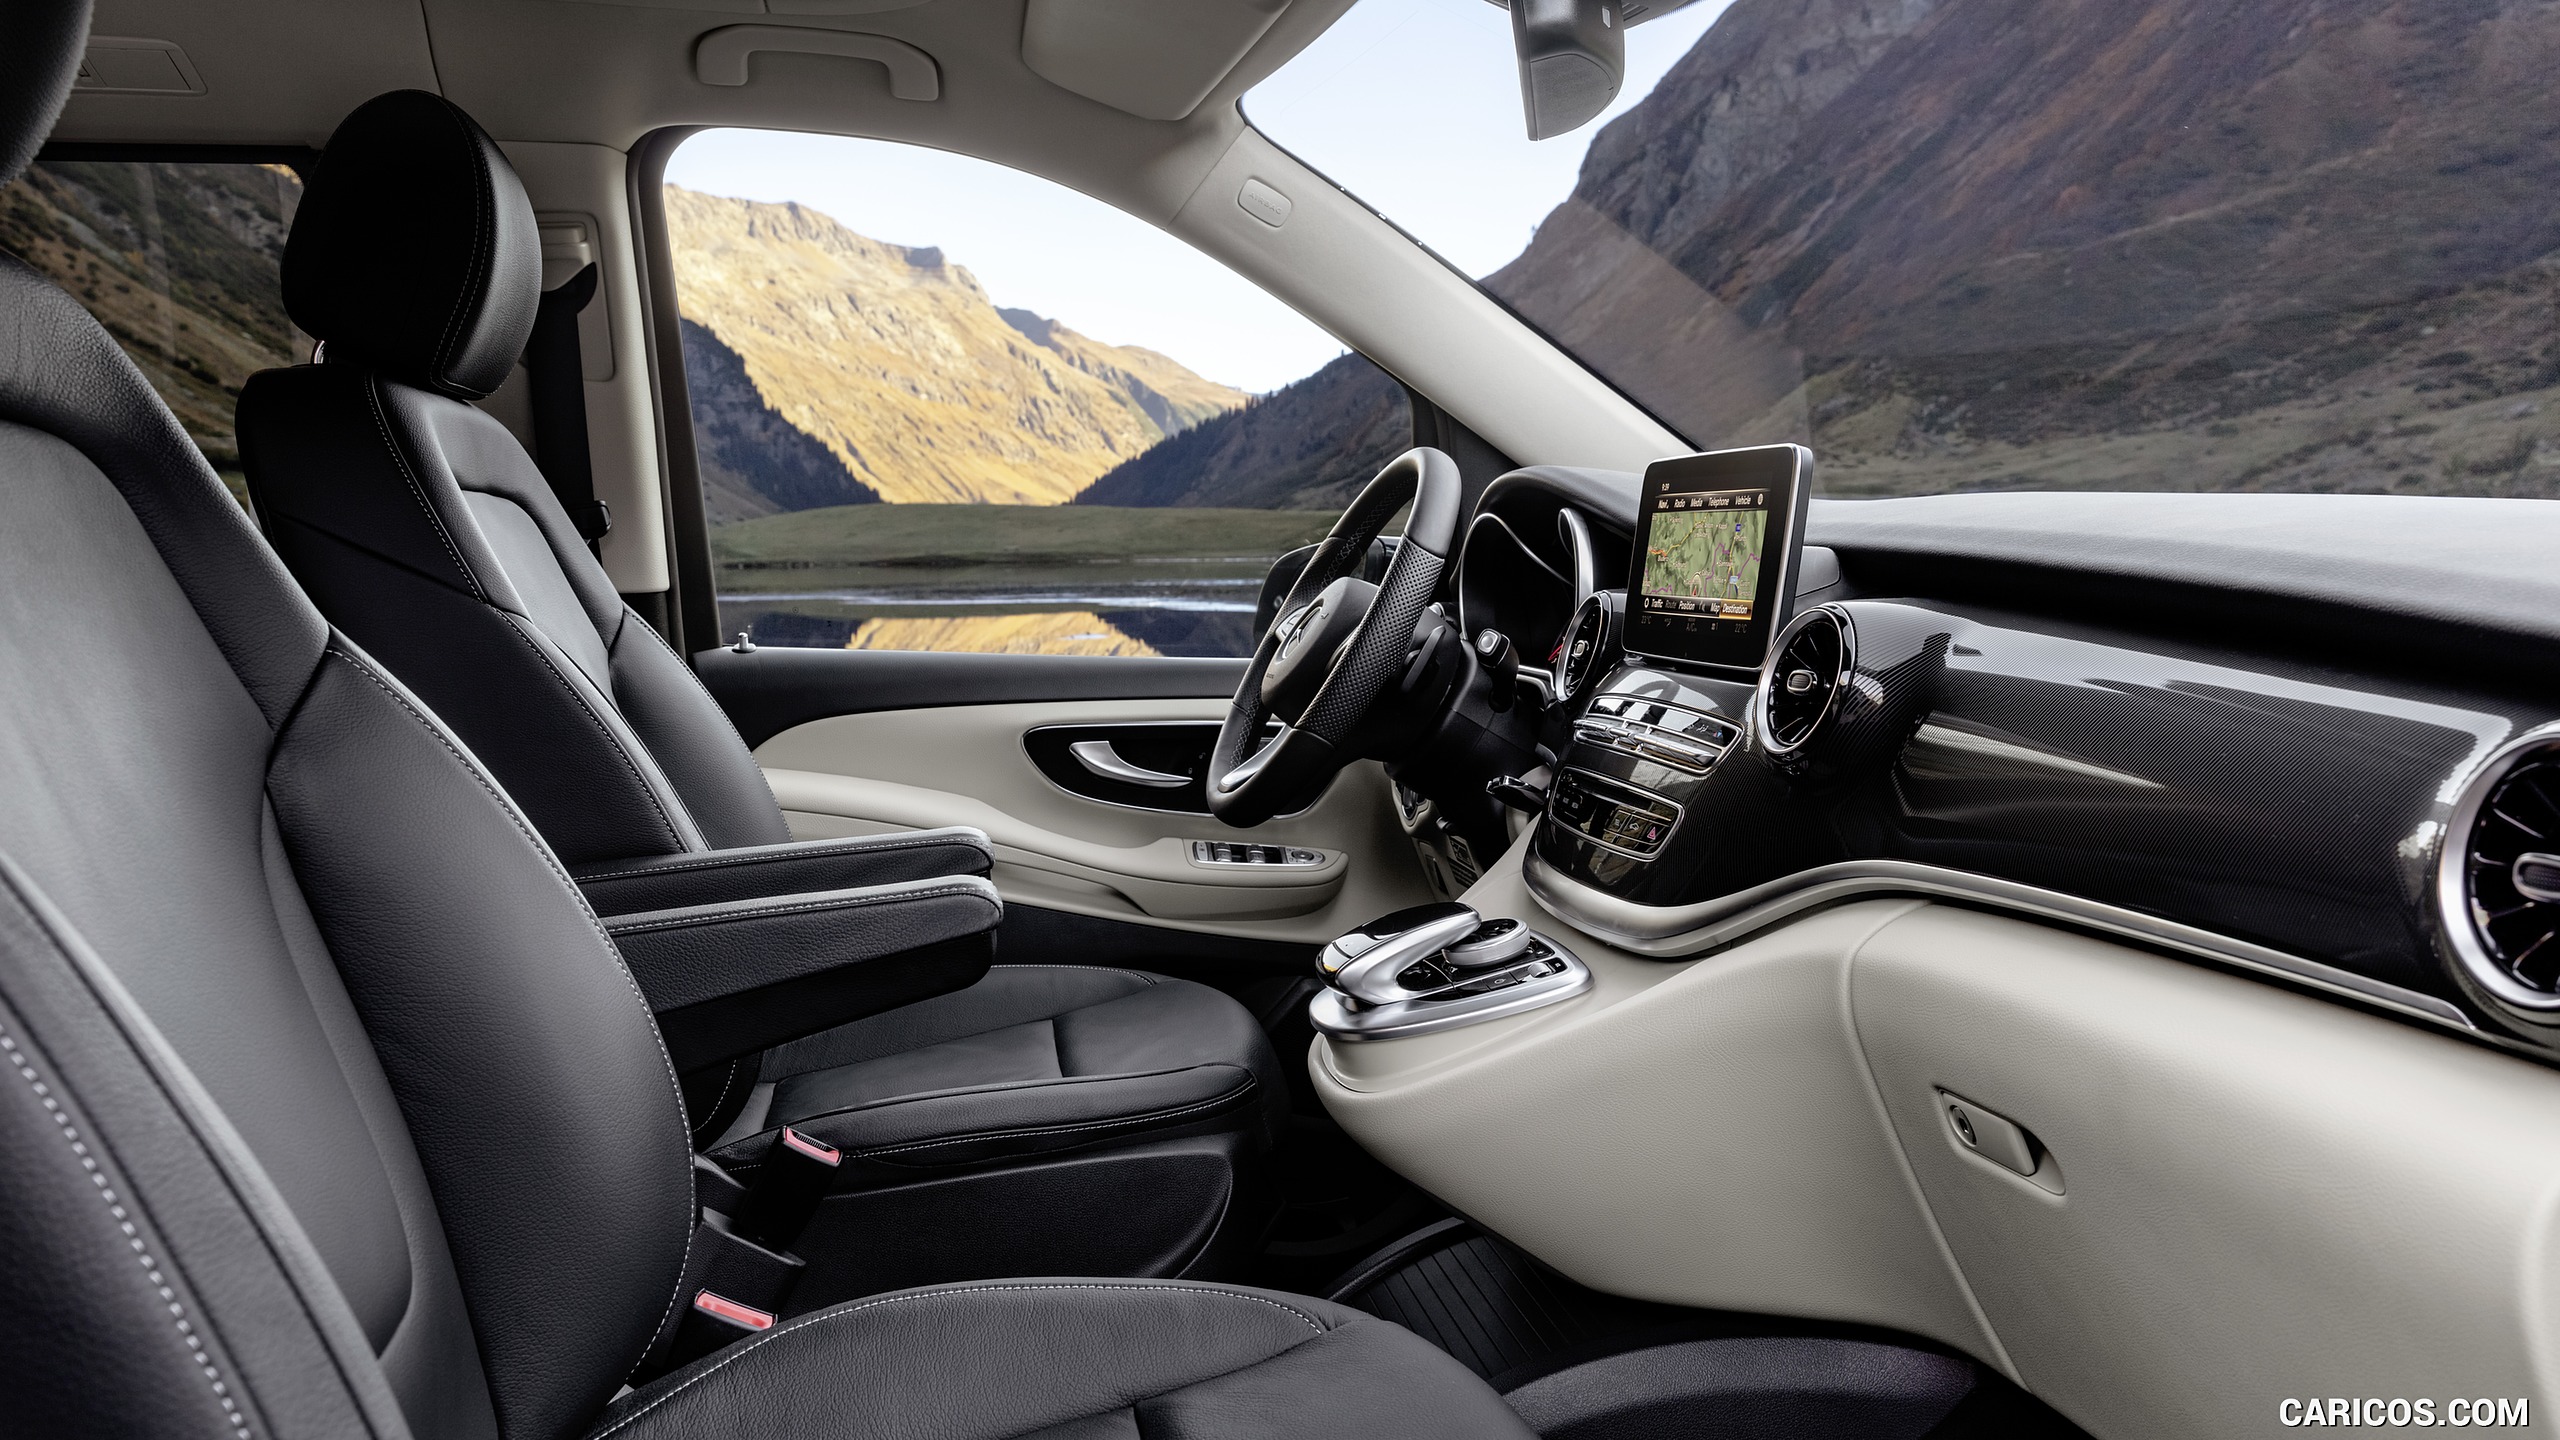 2019 Mercedes Benz V Class Marco Polo Interior Front Seats Hd